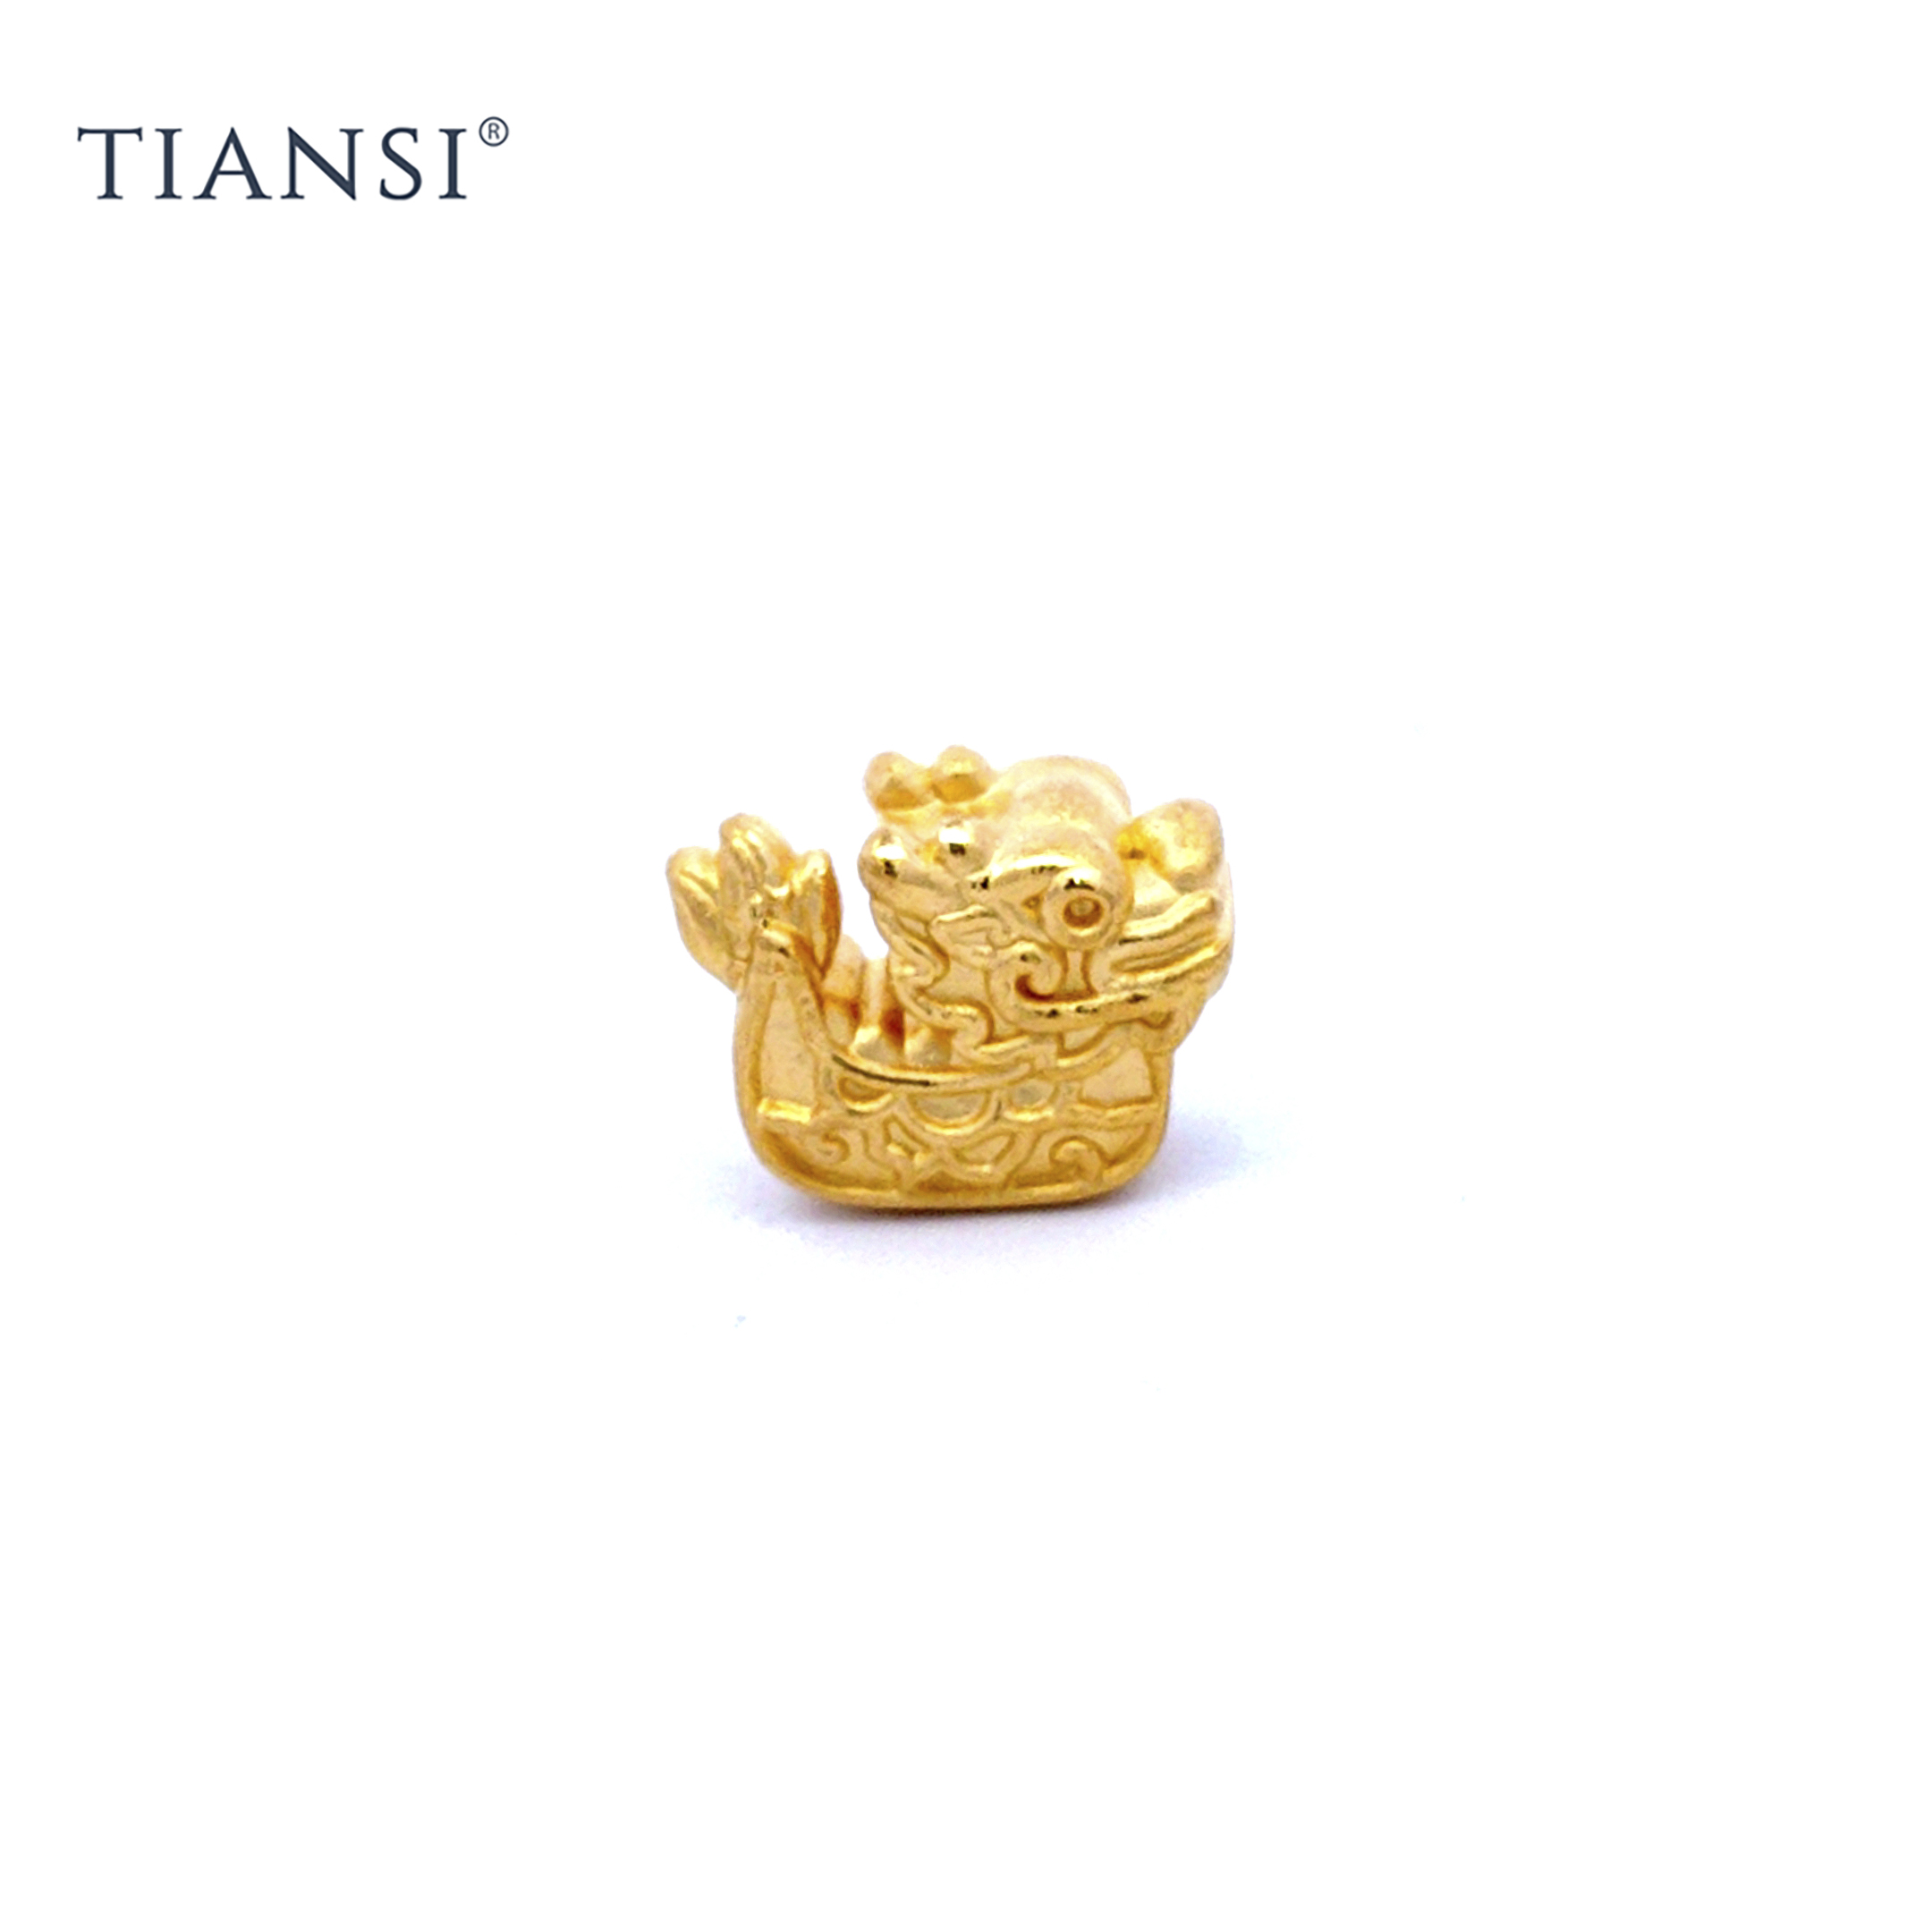 TIANSI 999(24K) Gold Dragon Boat Charm